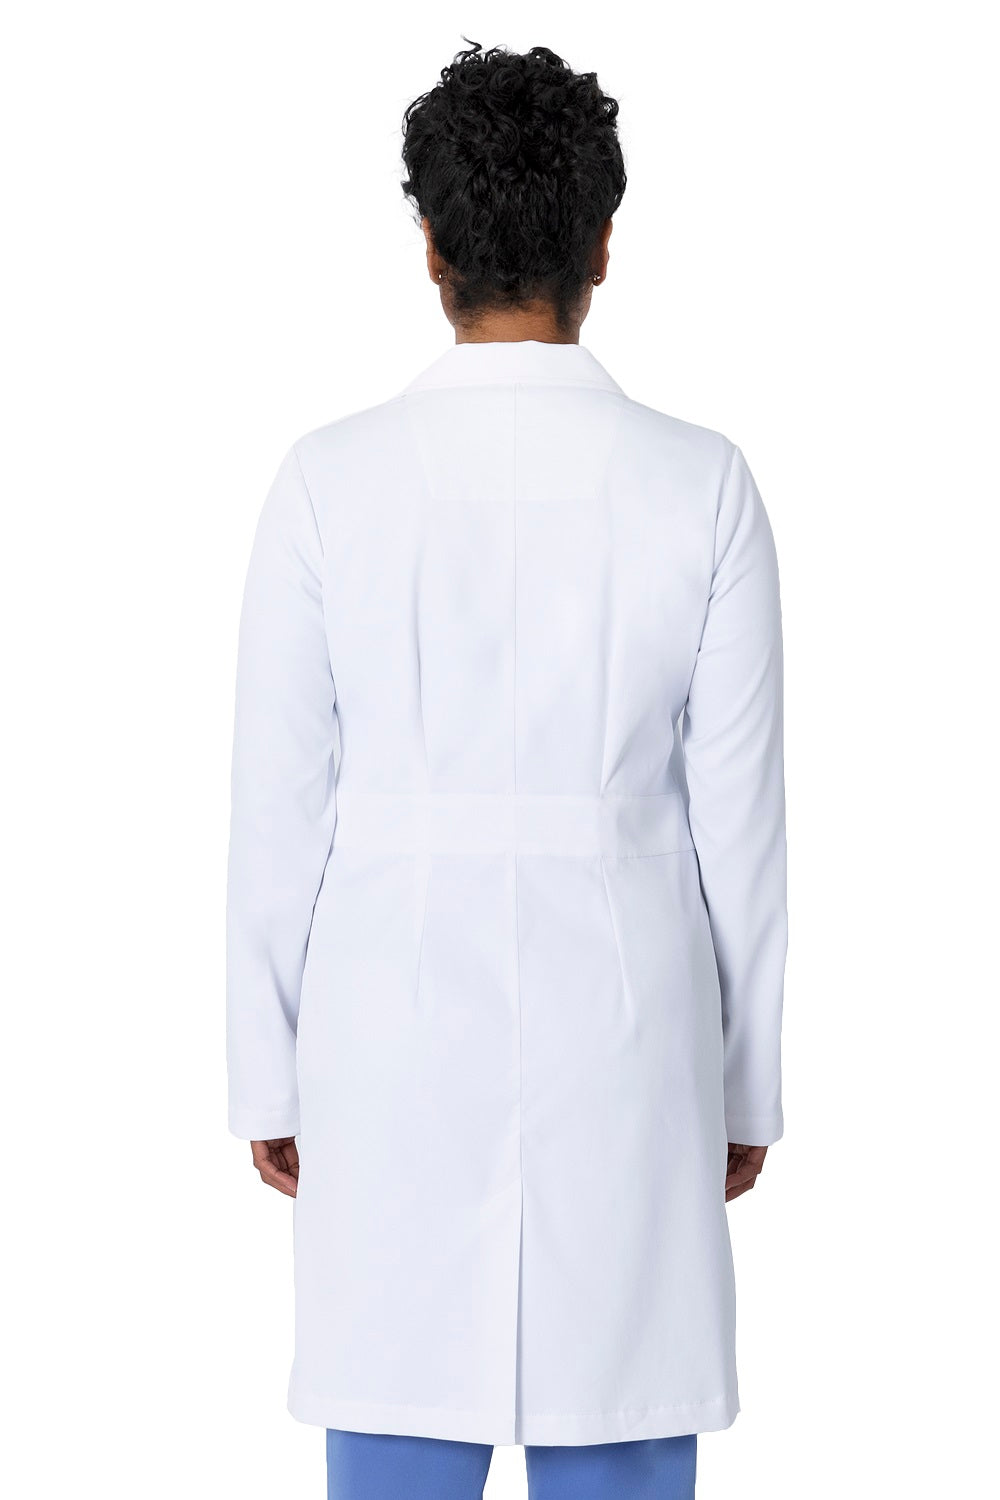 Healing Hands 5161 Faye Lab Coat White Back 